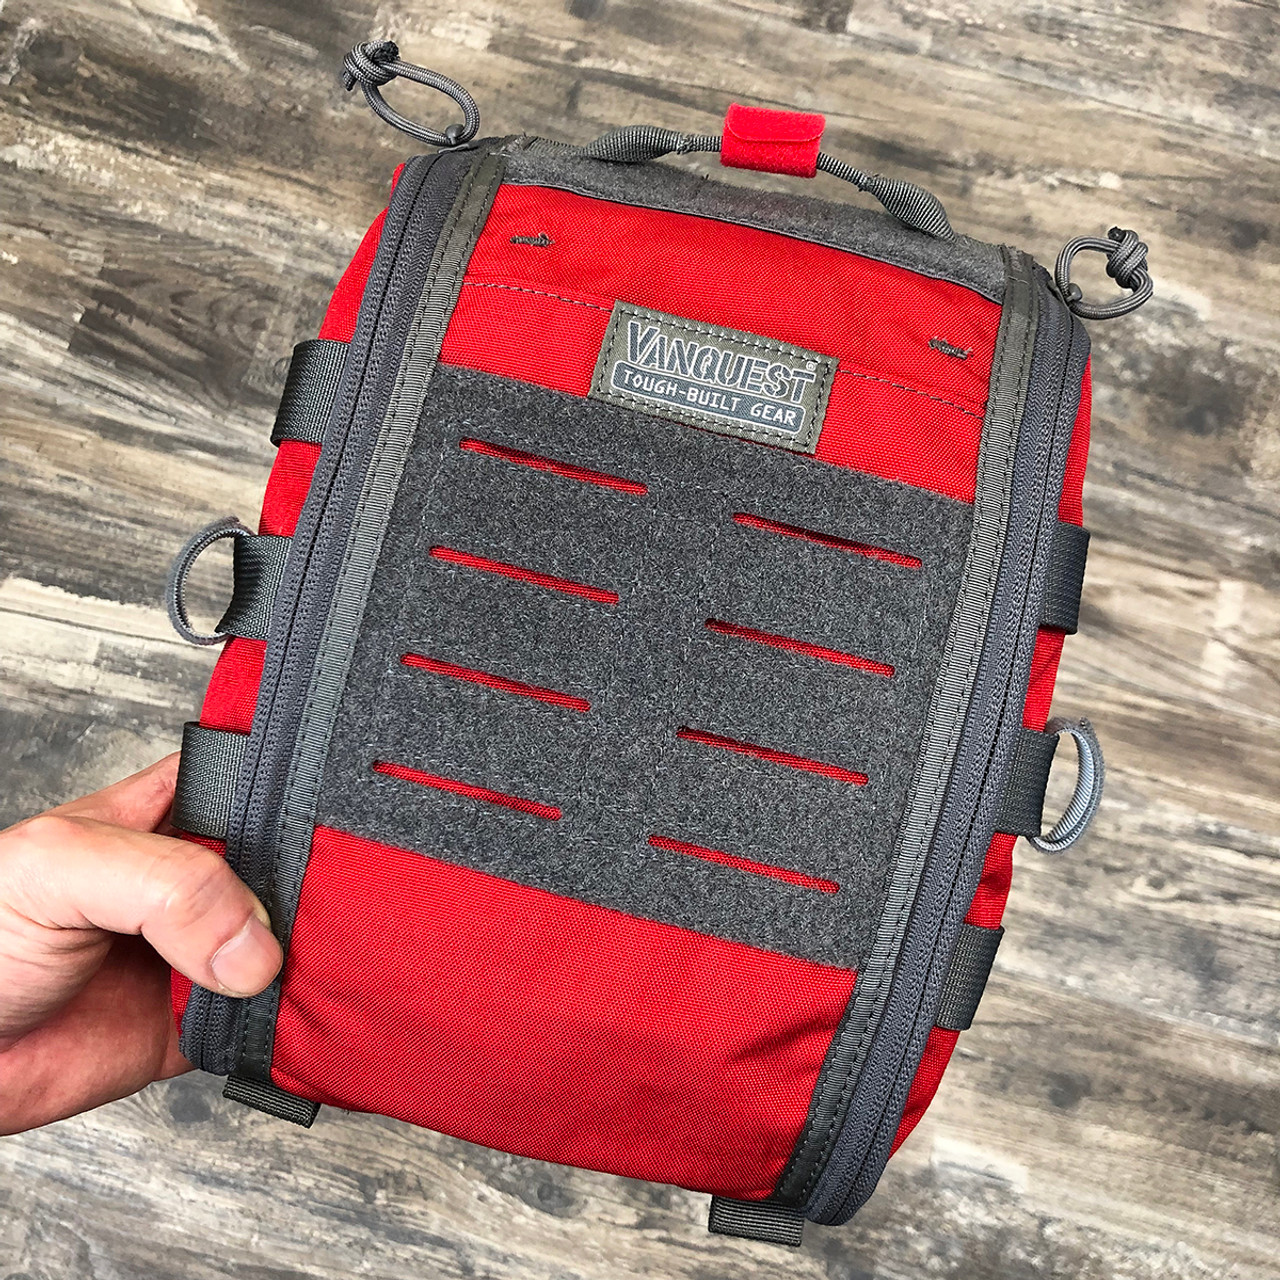 FATPack 7X10 (Gen-2): First Aid Trauma Pack - Vanquest Tough-Built